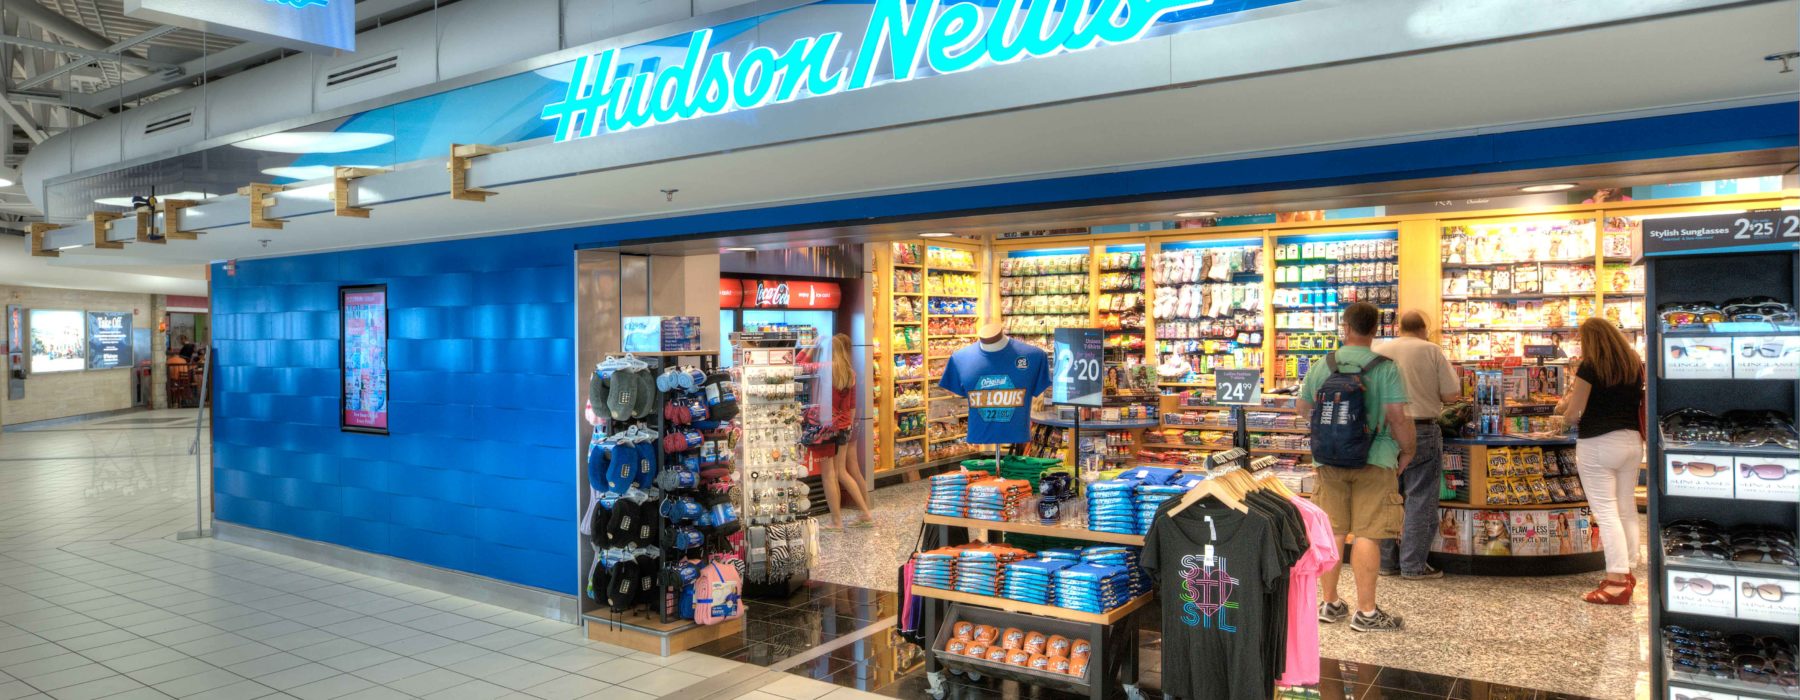 Front of Hudson News retail shop in St. Louis Lambert International Airport